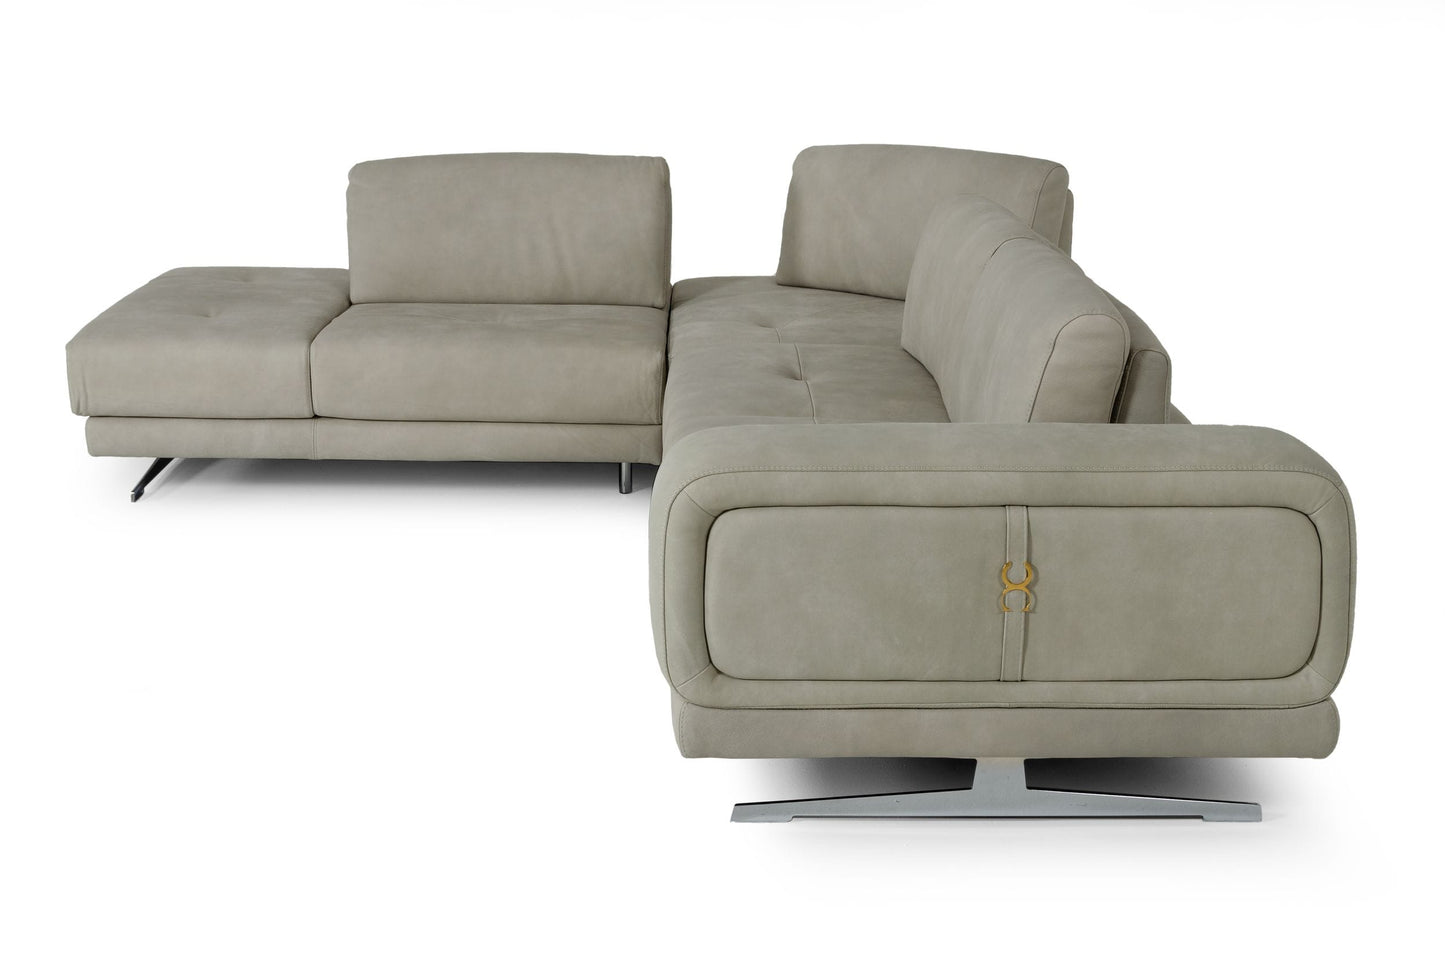 VIG Furniture Coronelli Mood Italian Grey Leather Left Sectional Sofa